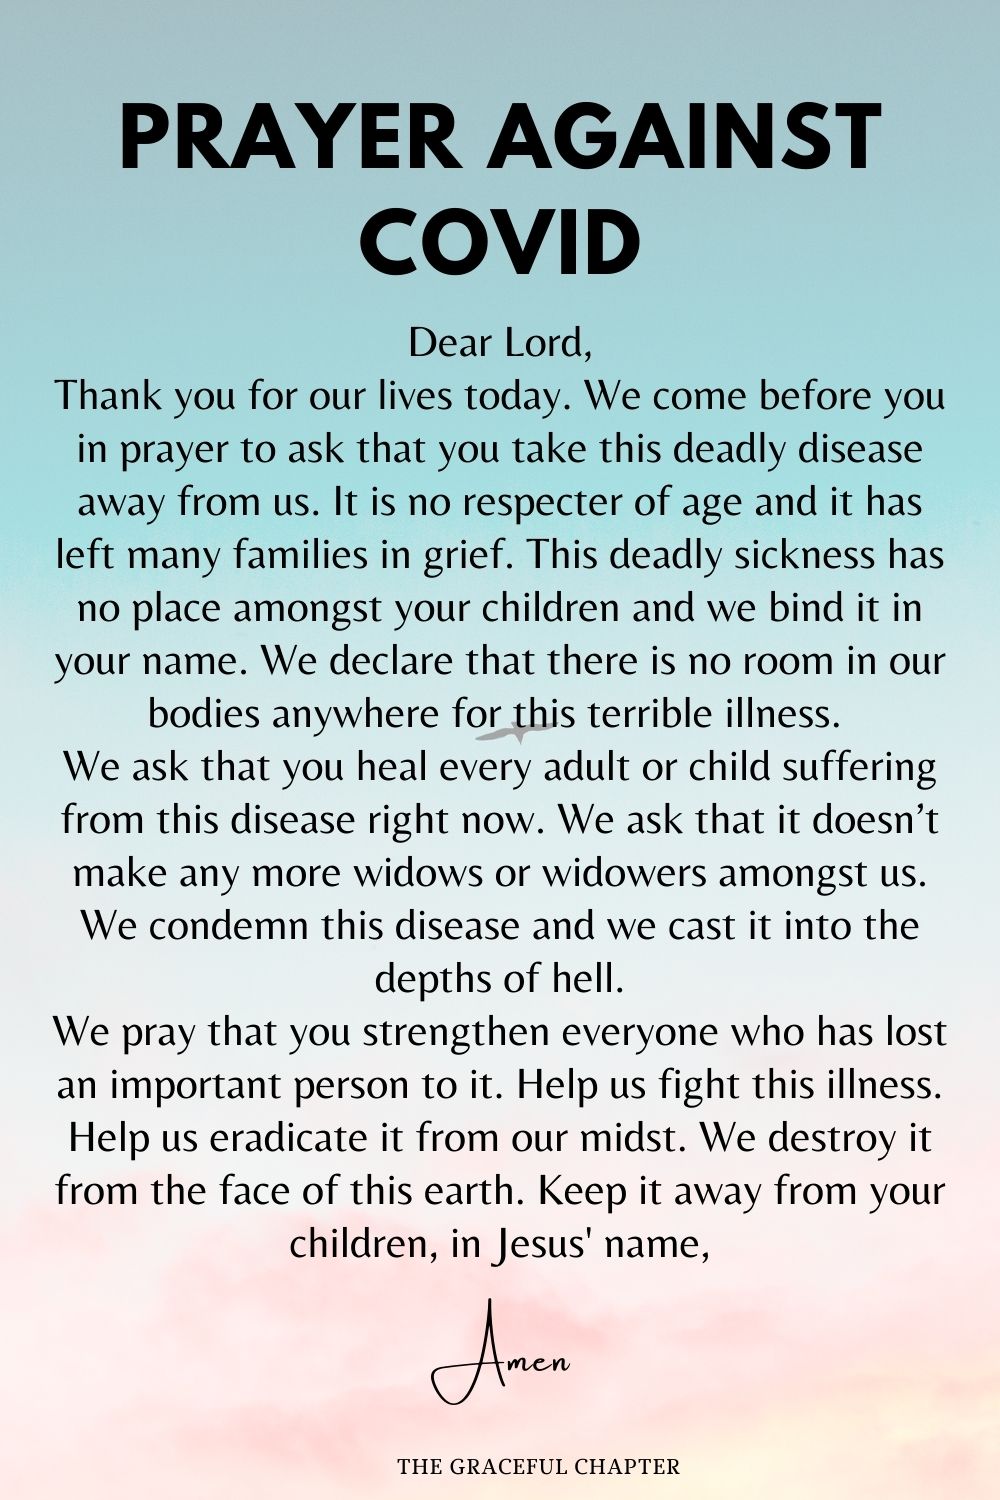 Prayer against COVID